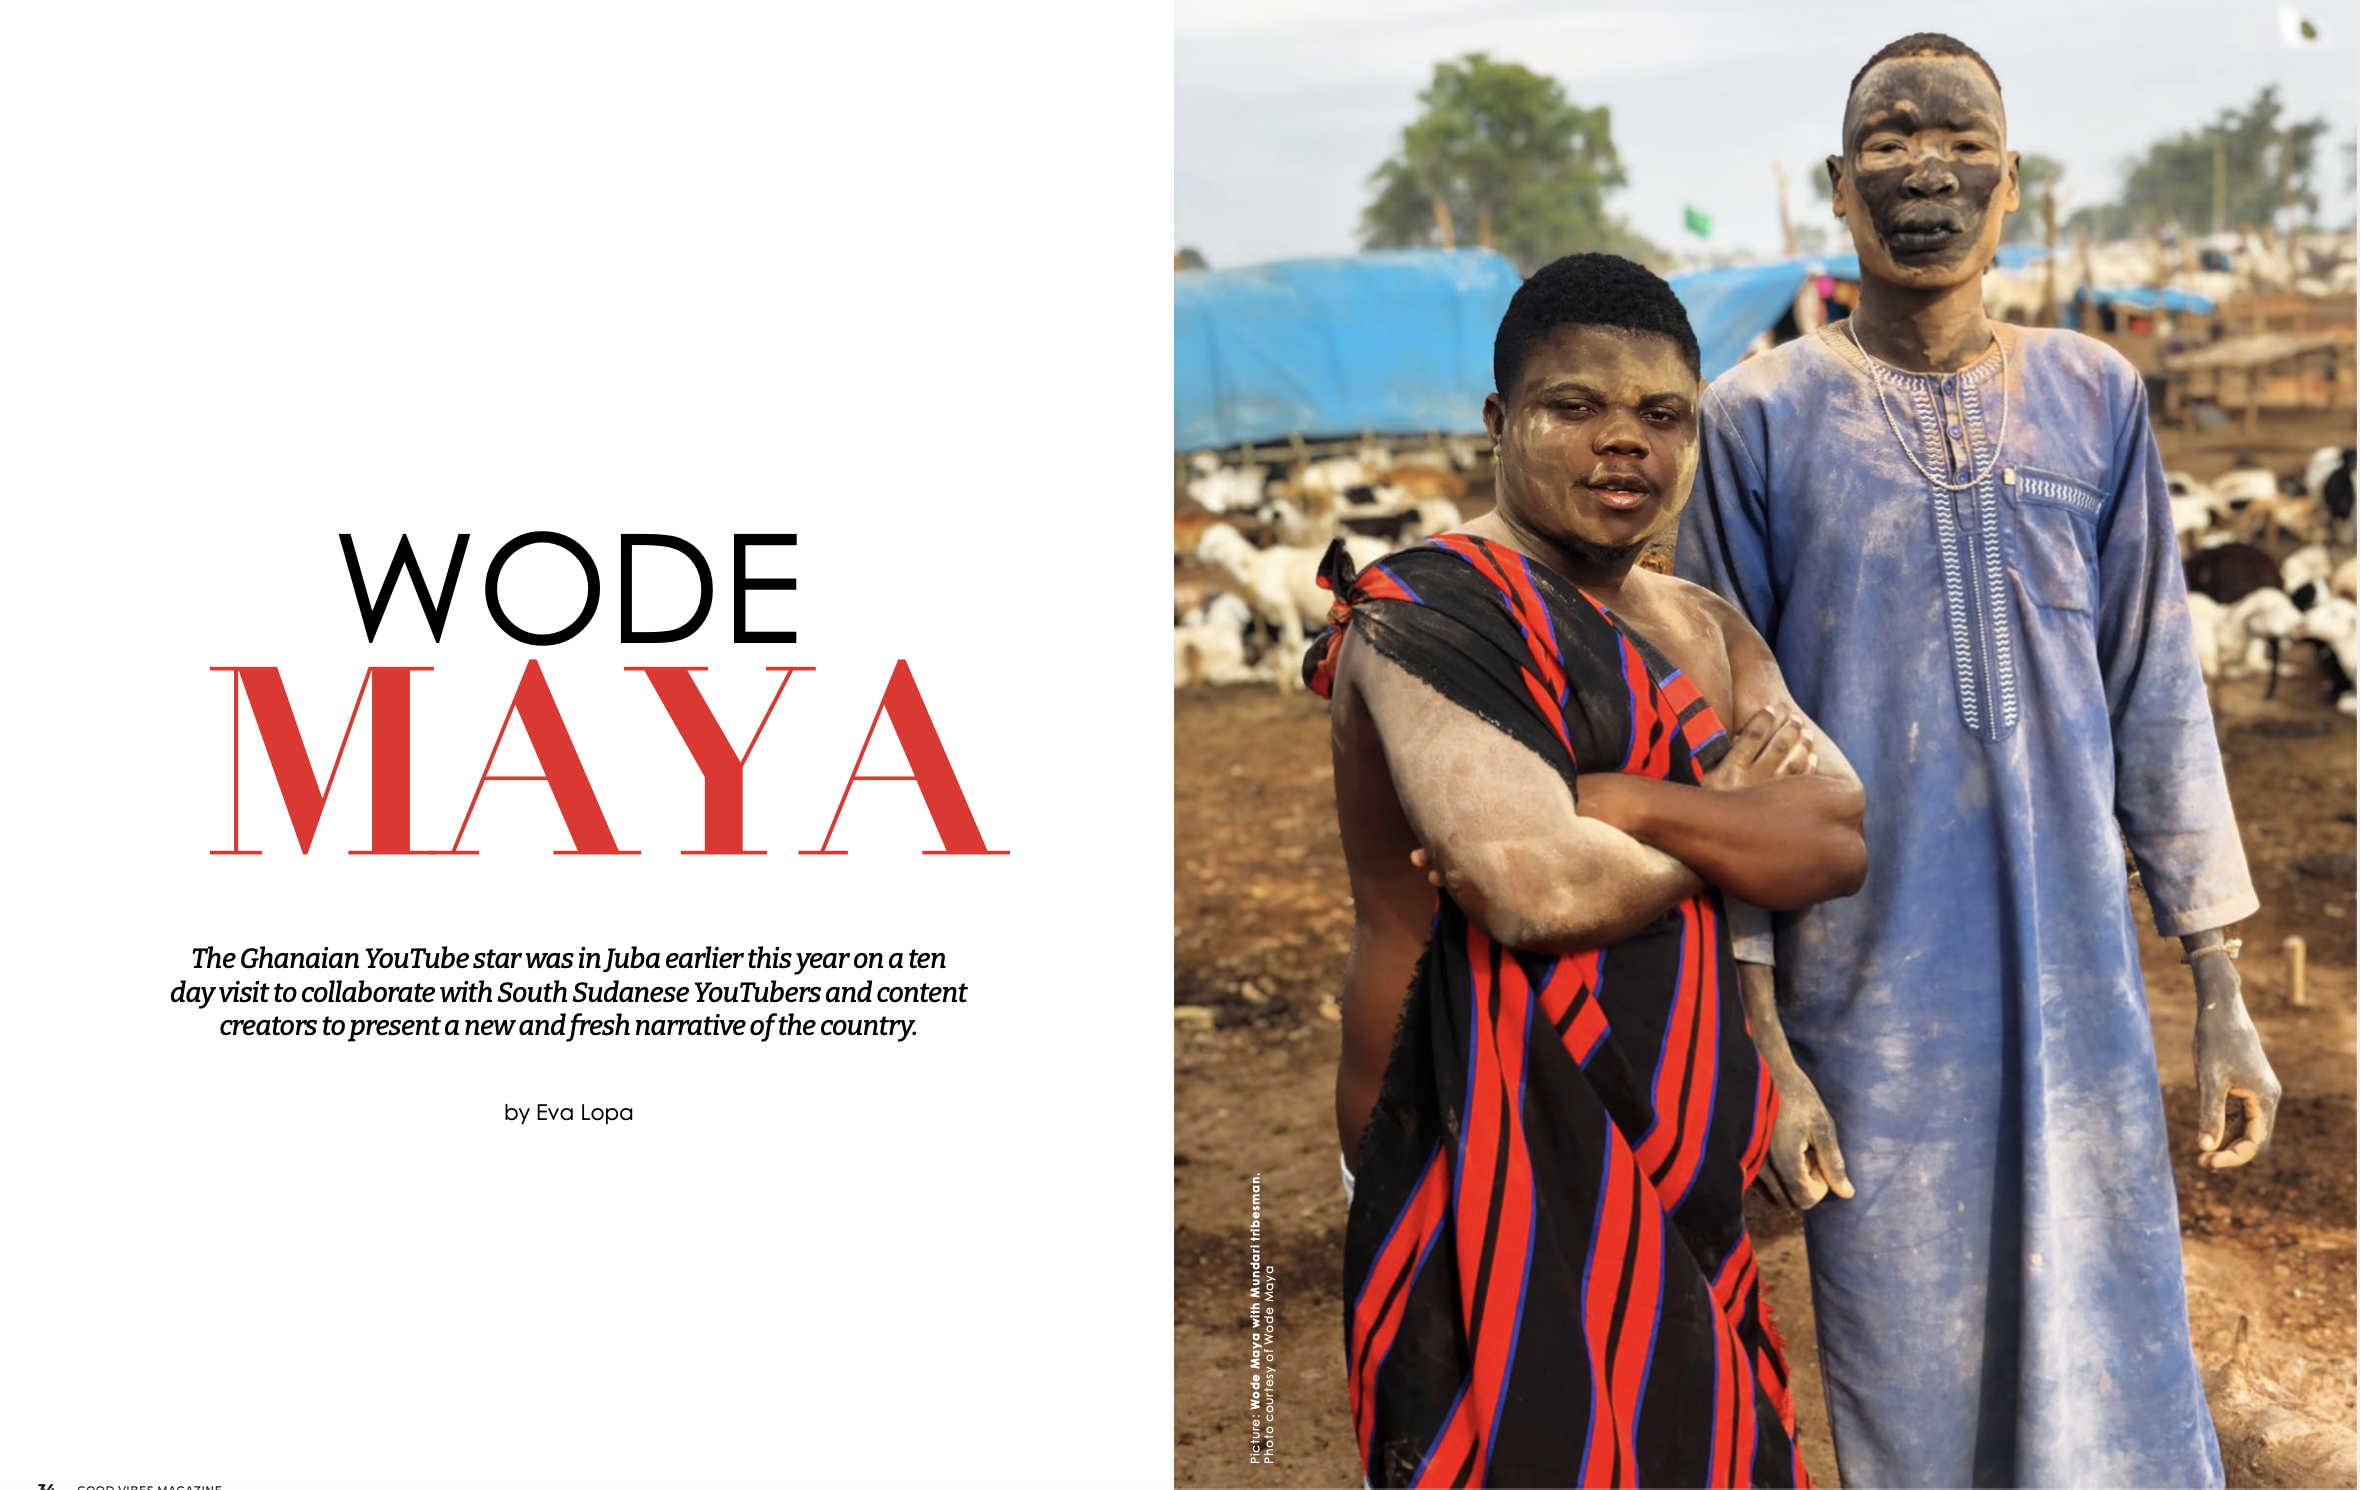 Wode Maya's Visit to South Sudan